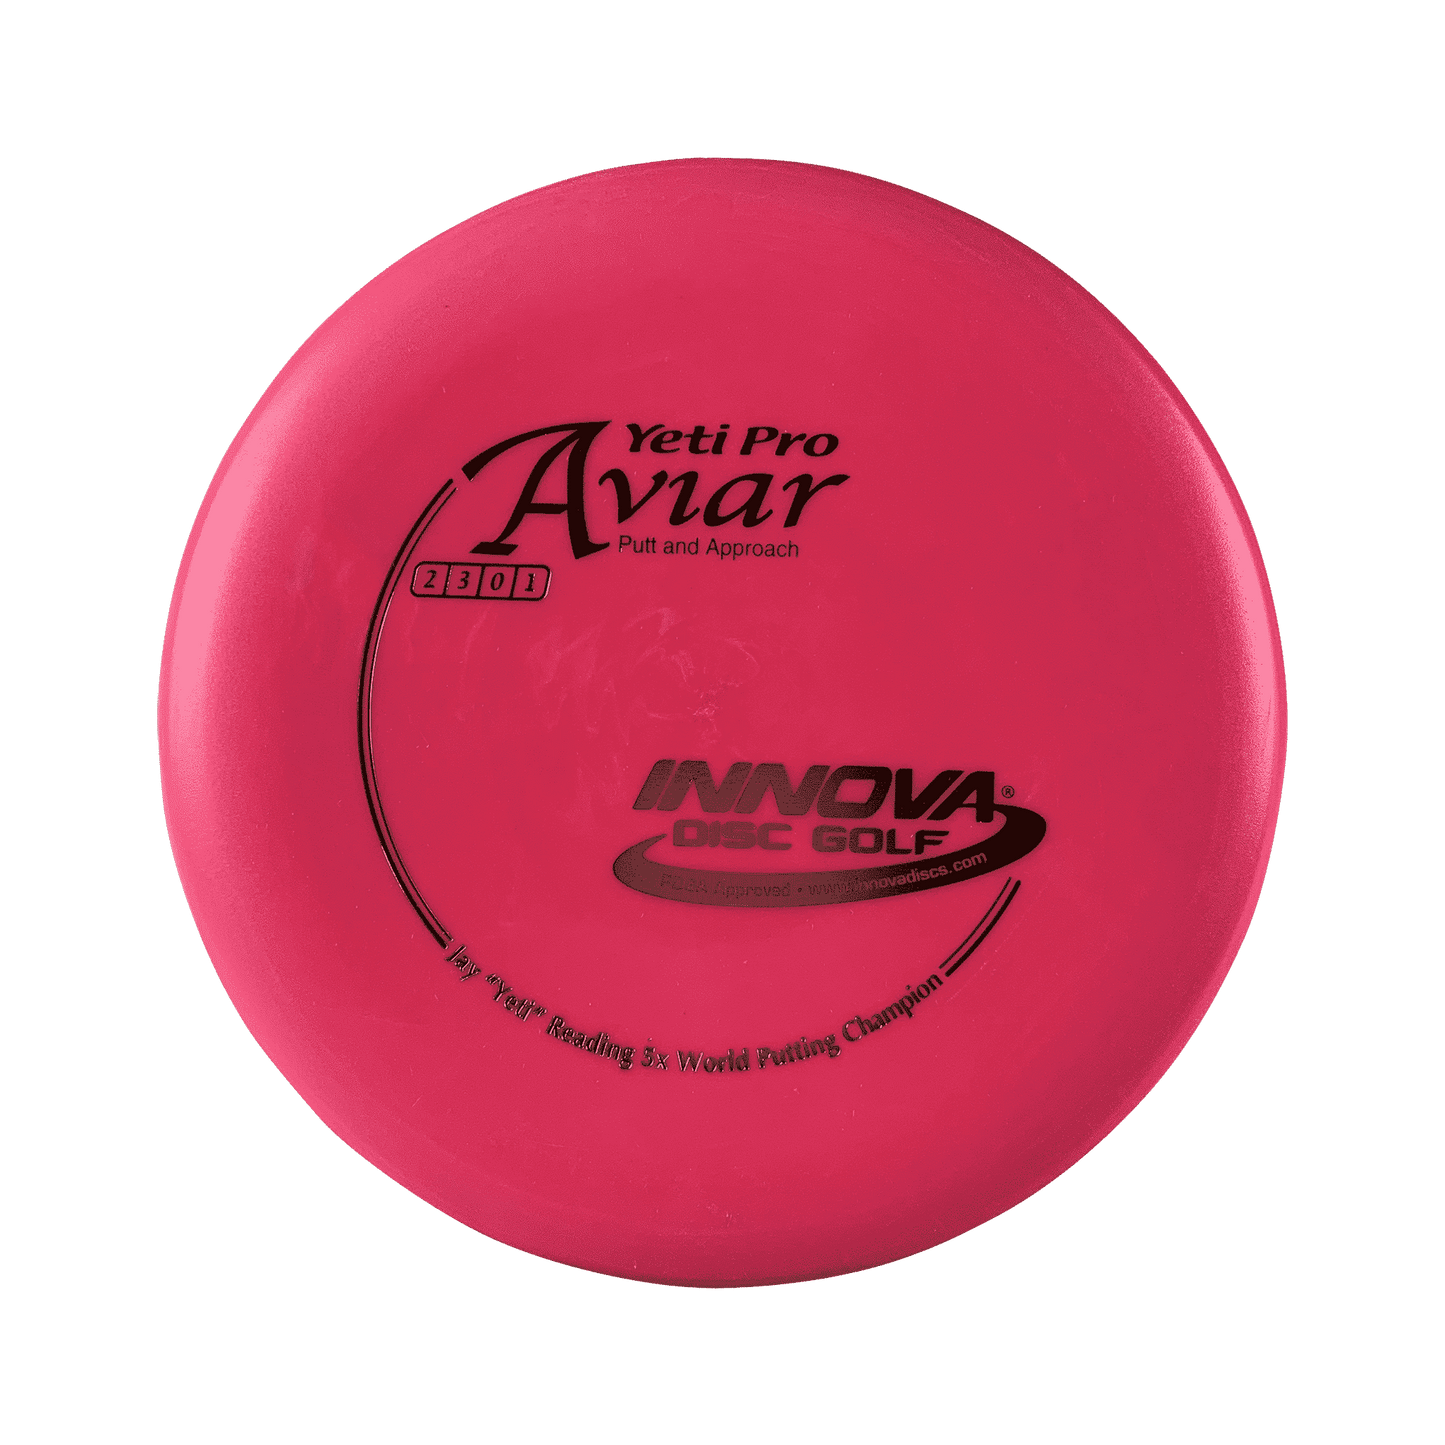 Yeti Pro Aviar Disc Innova pink 170 